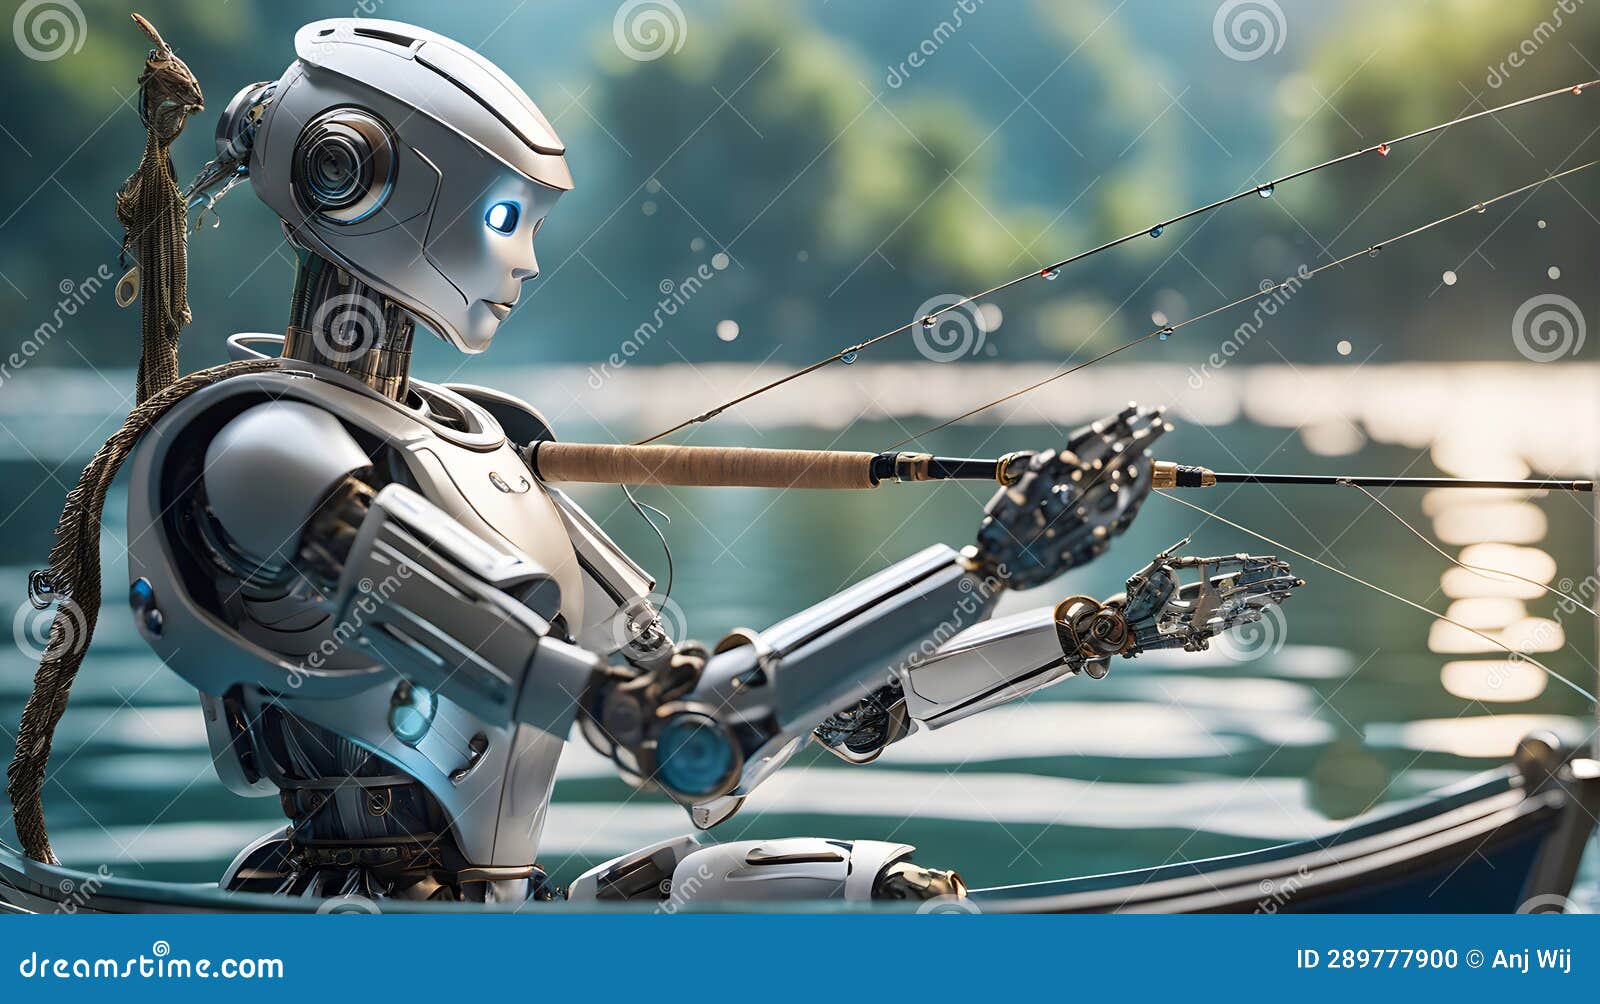 https://thumbs.dreamstime.com/z/robot-using-fishing-rod-boat-intelligence-robots-doing-all-human-activities-289777900.jpg